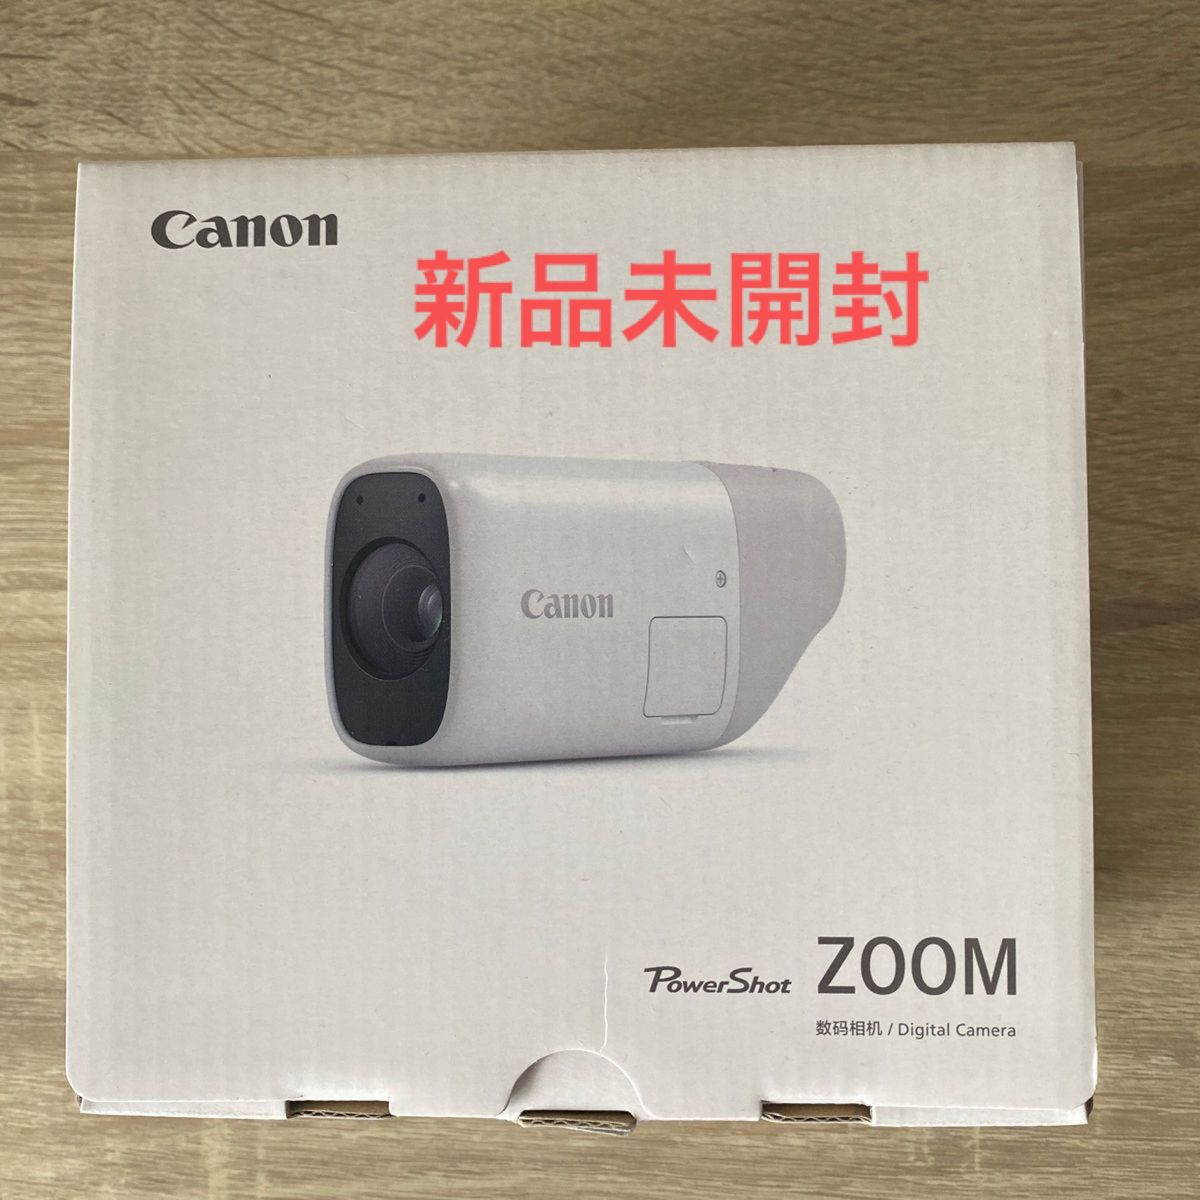 Canon powershot zoom